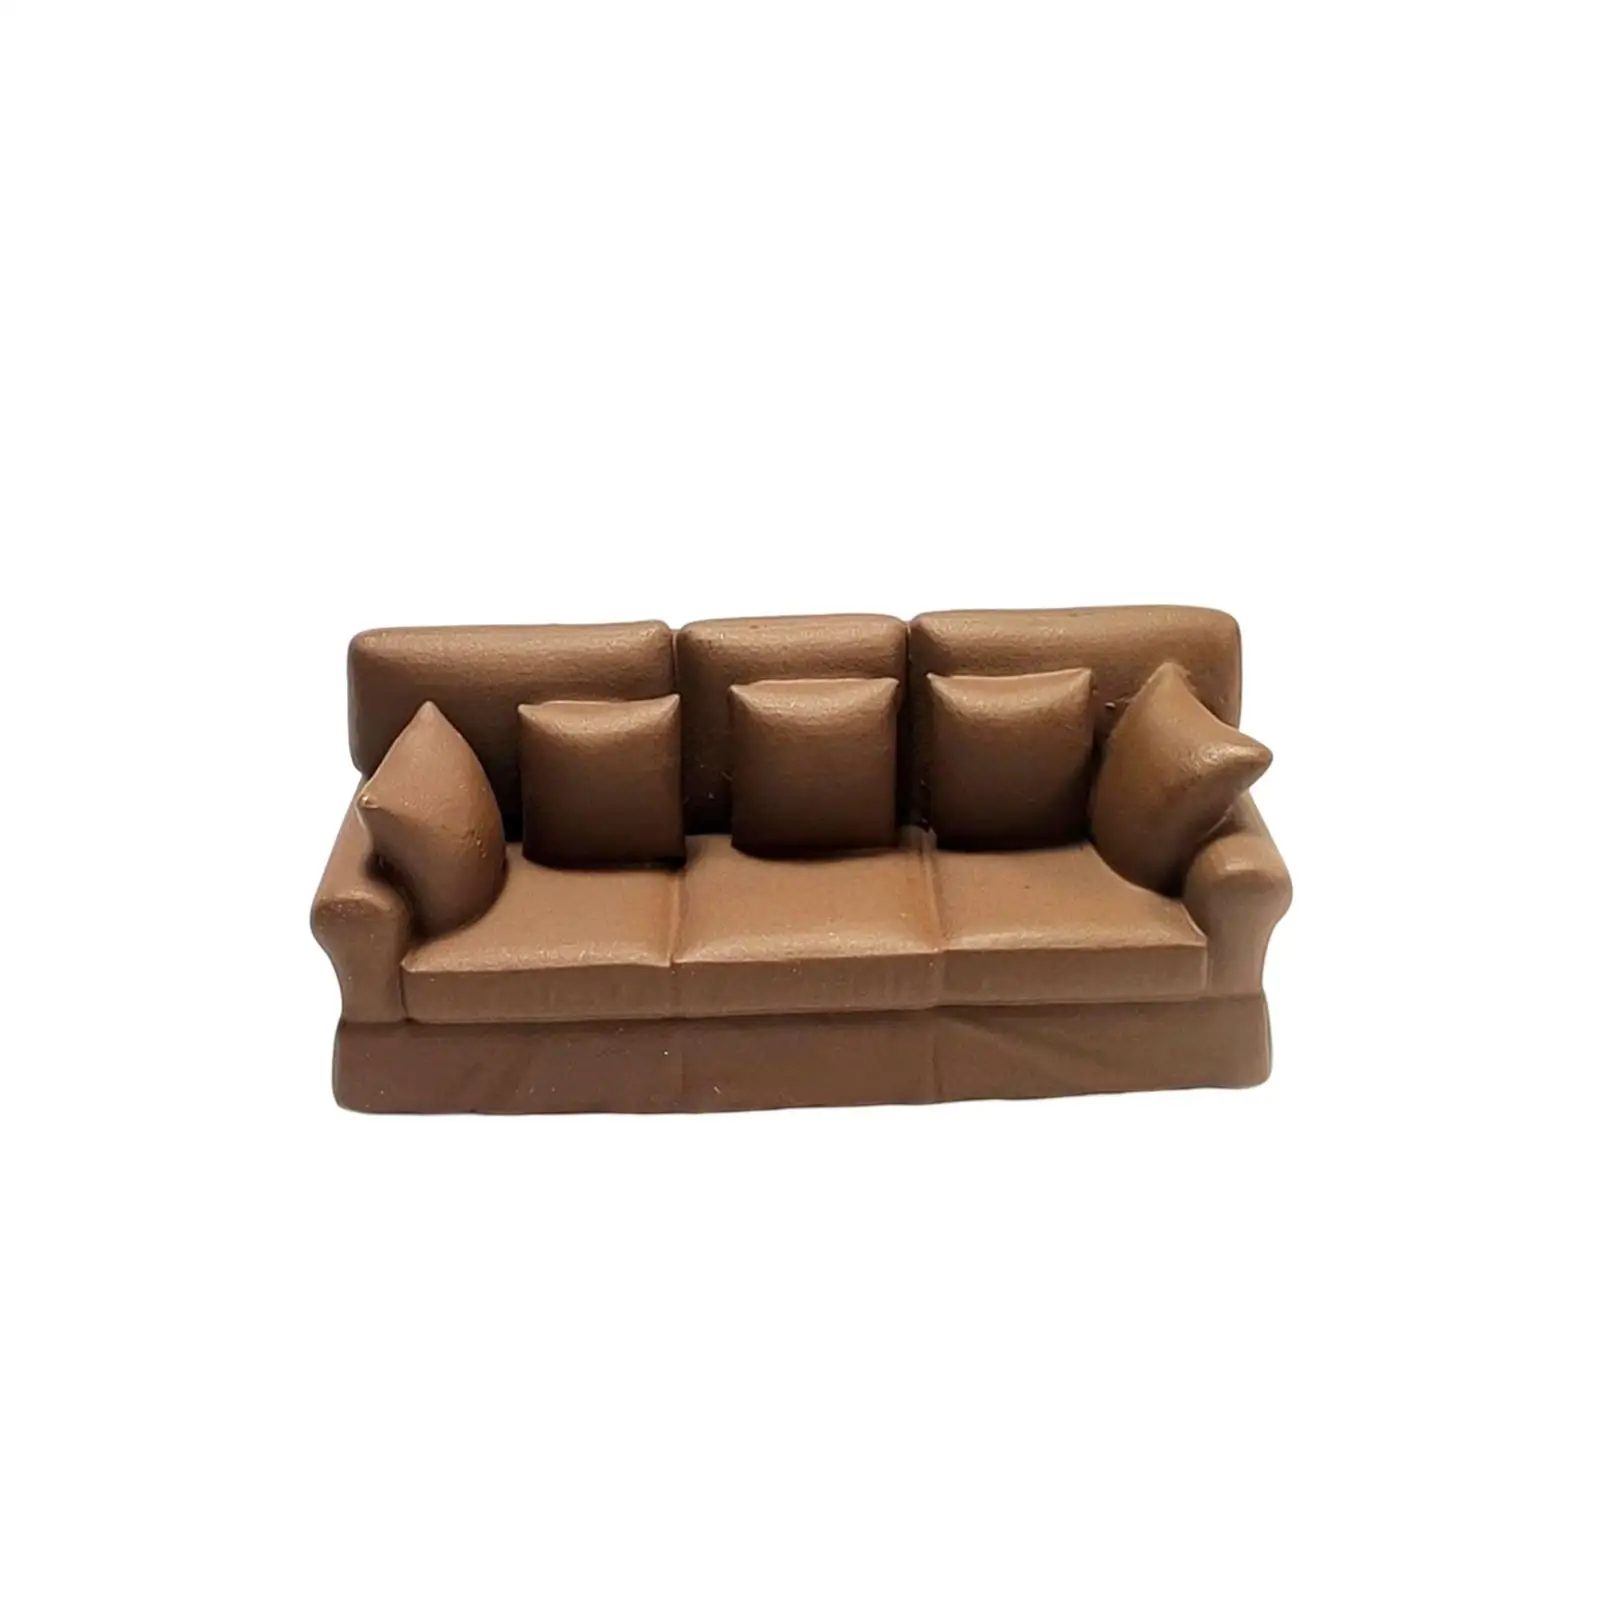 1/64 Mini Ornaments Furniture Miniature Resin Sofa Model for Playhouses, Studio Scenes, Tabletop Decor Craft Accessory Cute